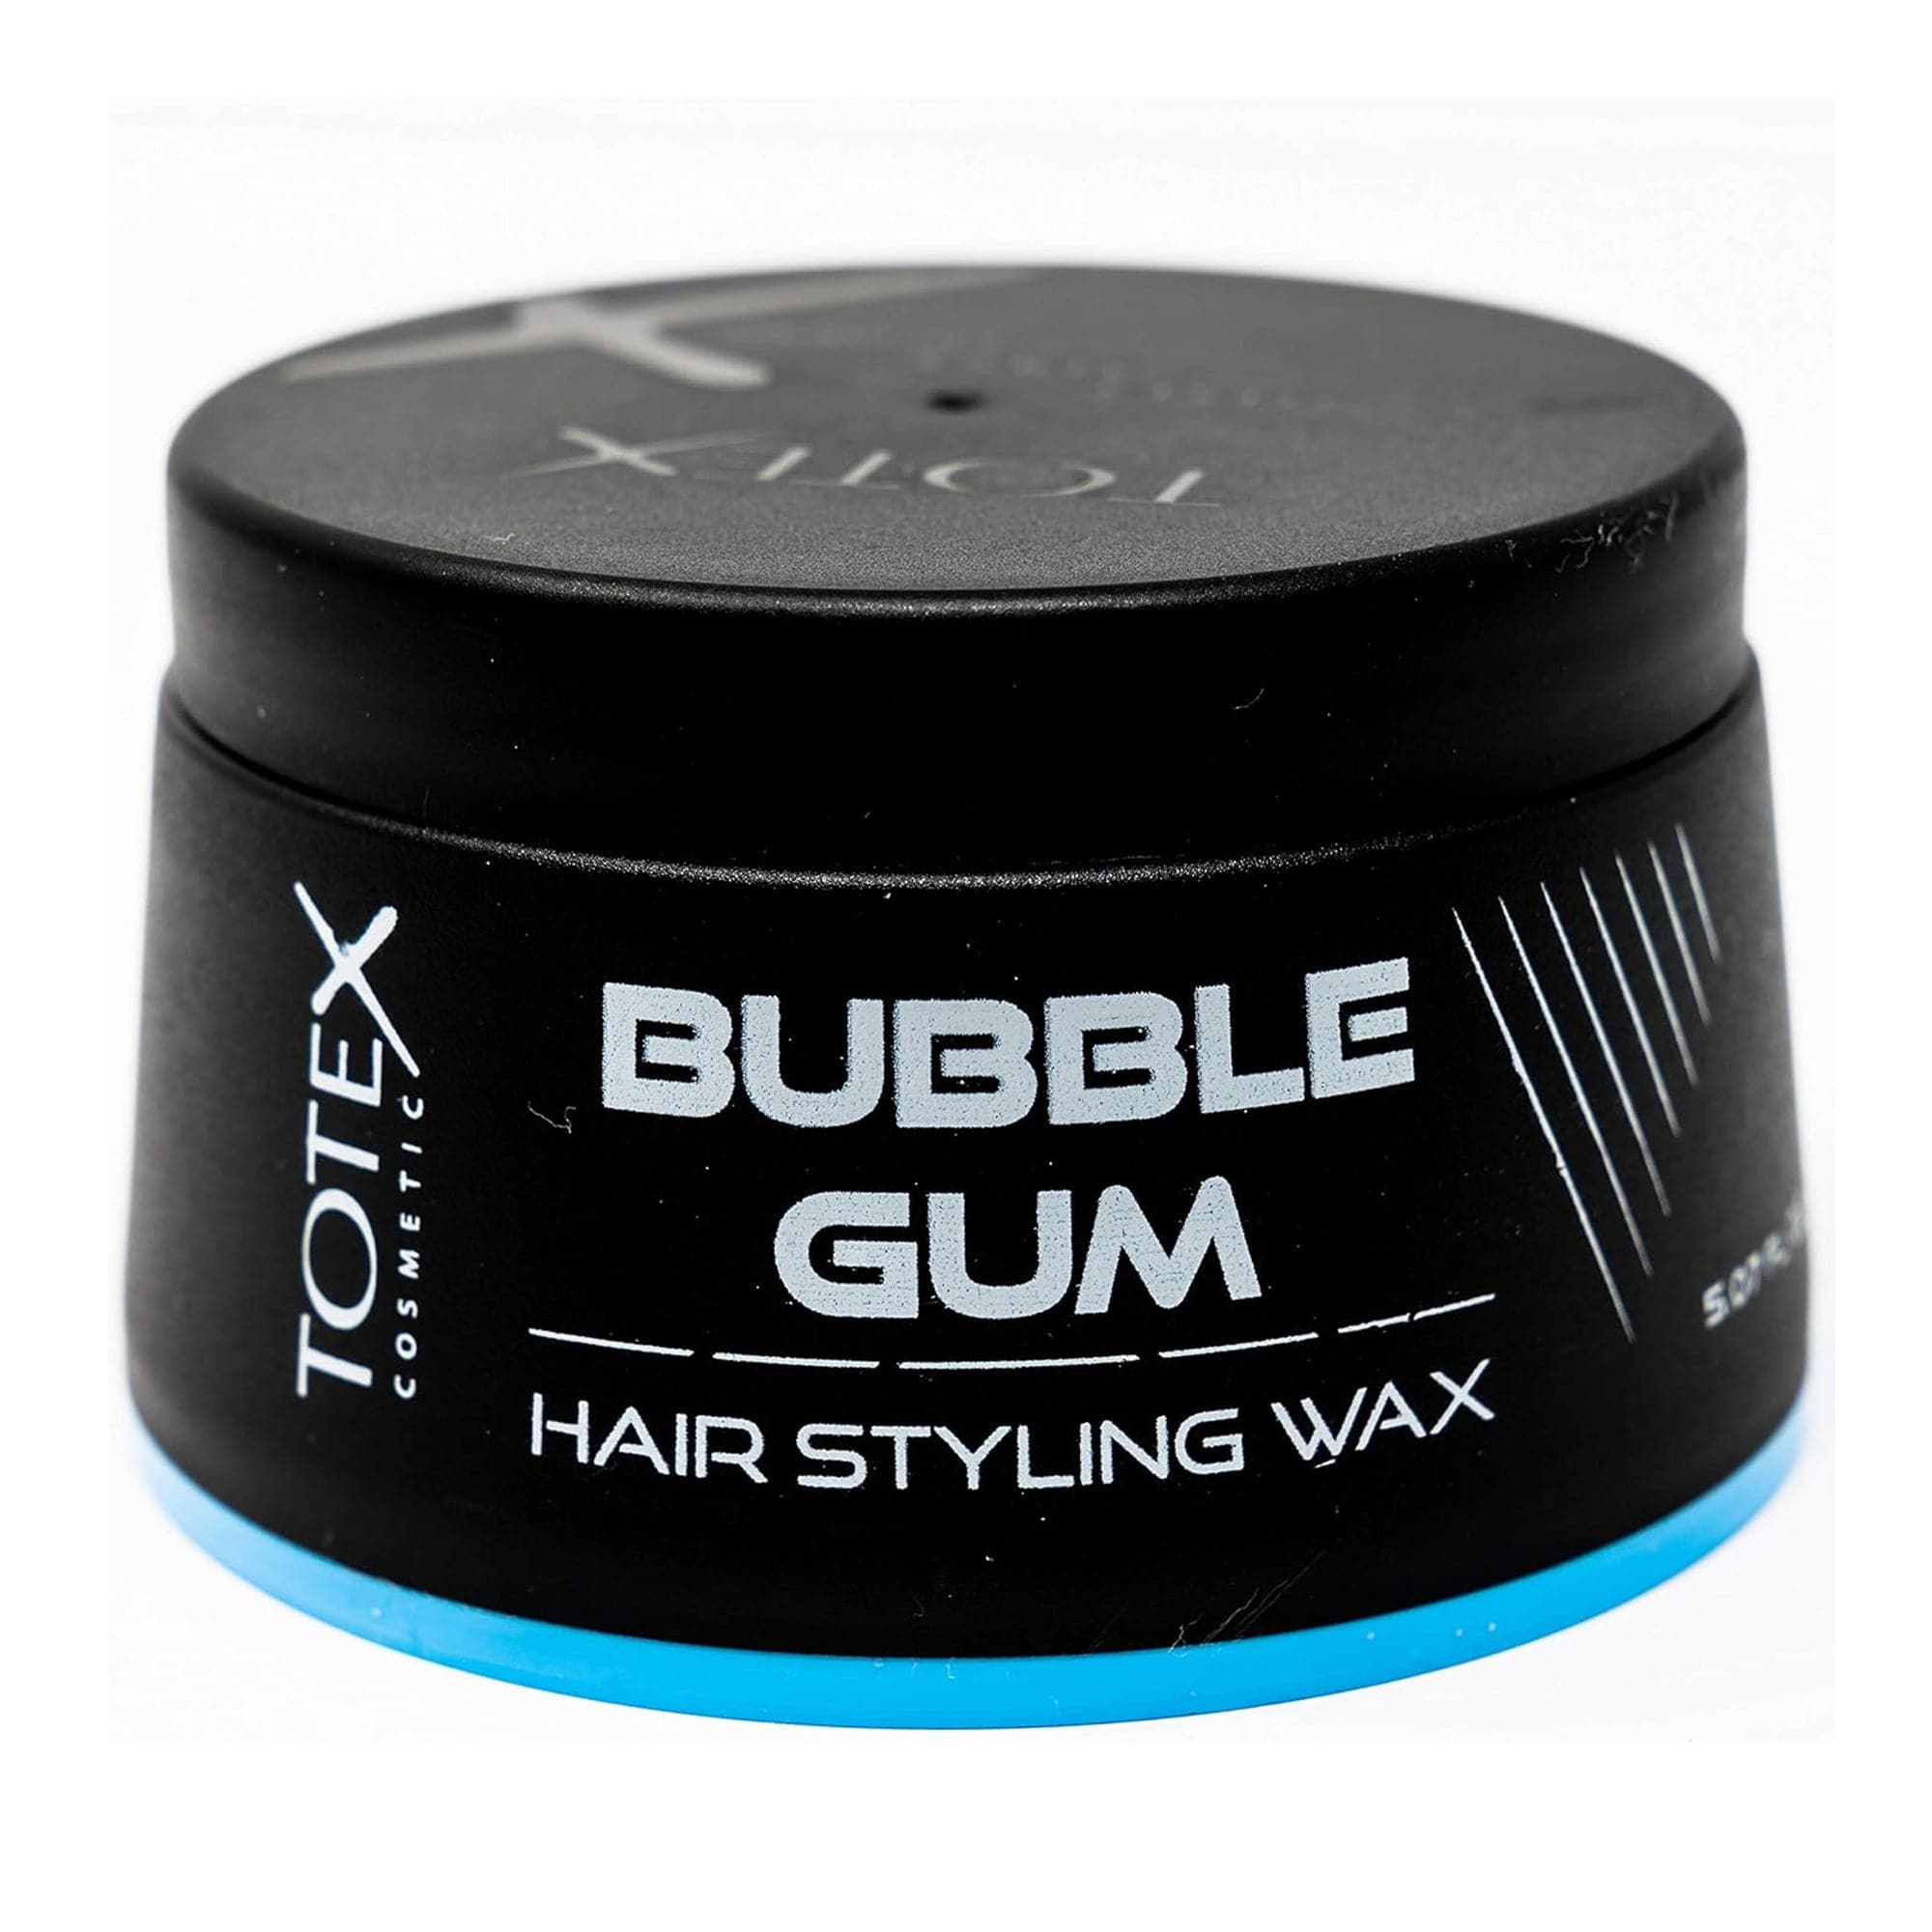 Totex - Hair Styling Wax Bubble Gum 150ml